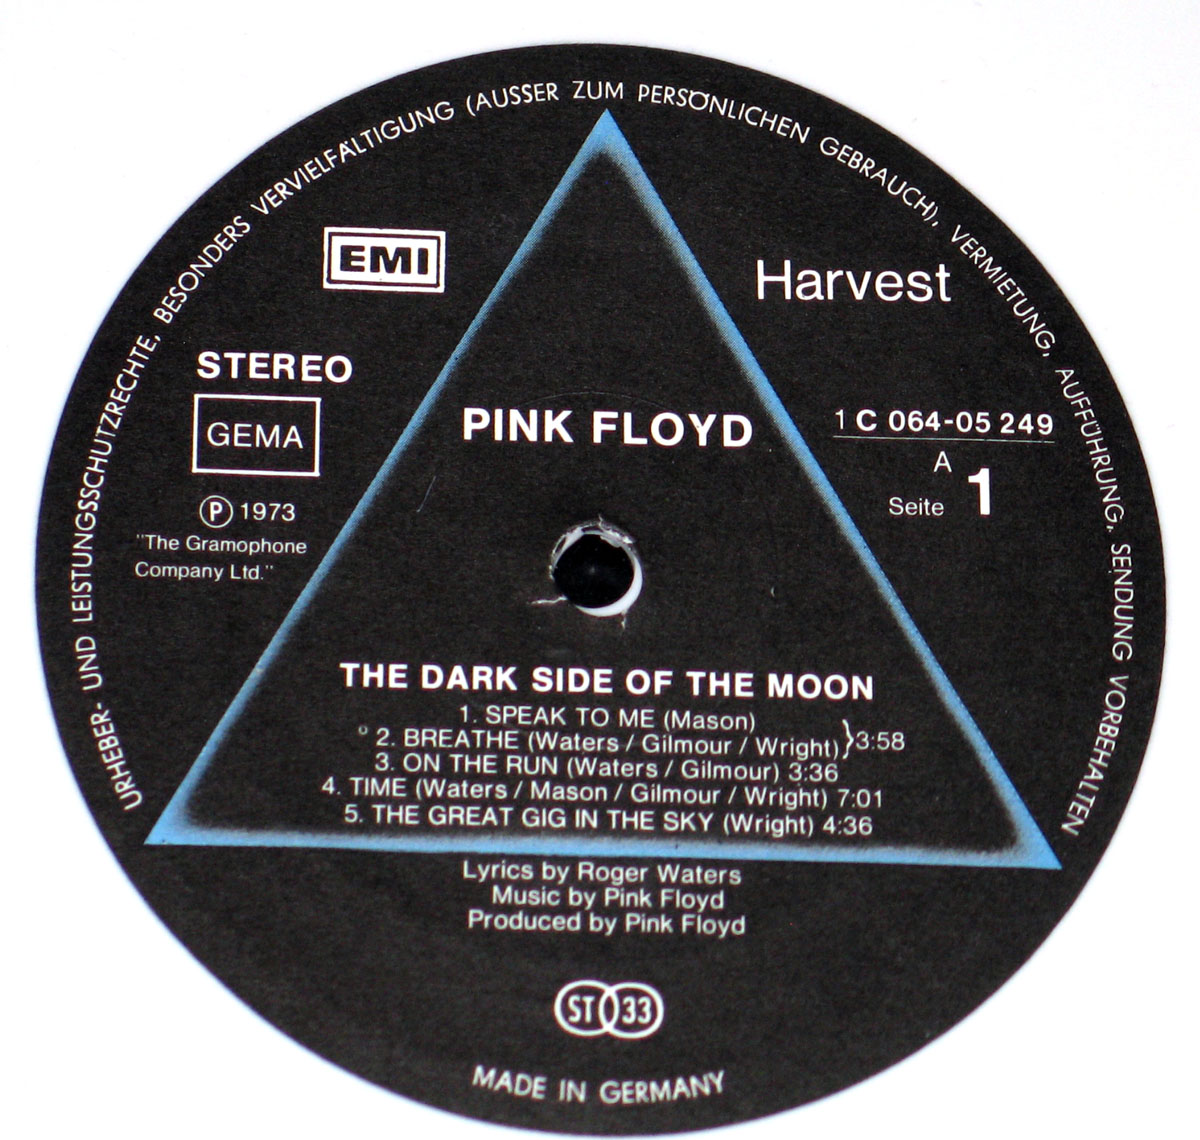 PINK FLOYD Dark Side of the Moon White Vinyl Vinyl Album Cover Gallery   Information #vinylrecords